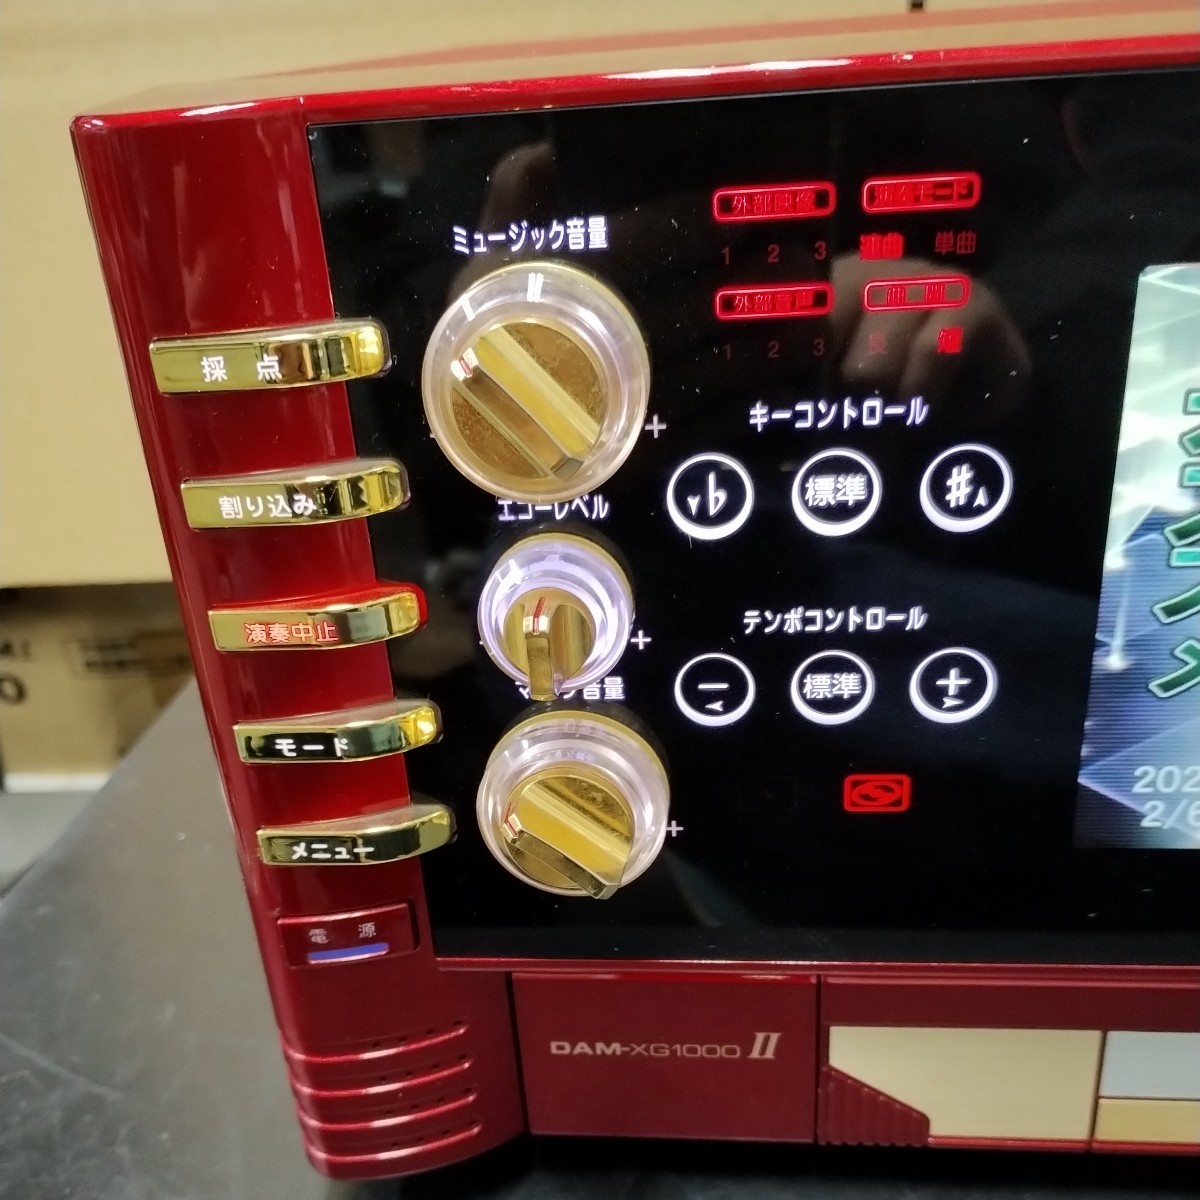 SFZ5 業務用 第一興商 DAM コントローラー DAM-XG1000Ⅱ 赤 中古 点検動作品の画像2